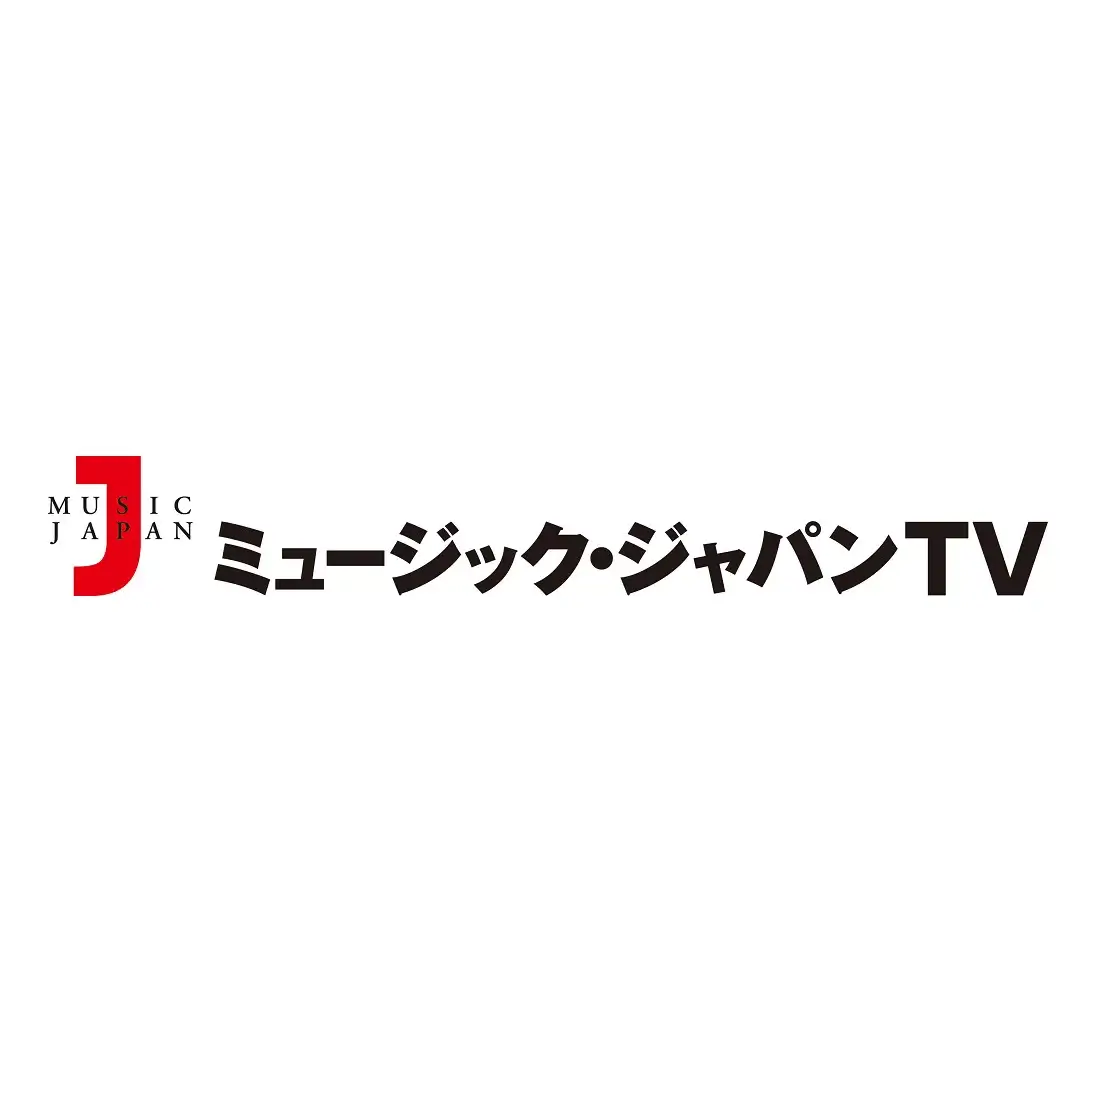 Music Japan TV